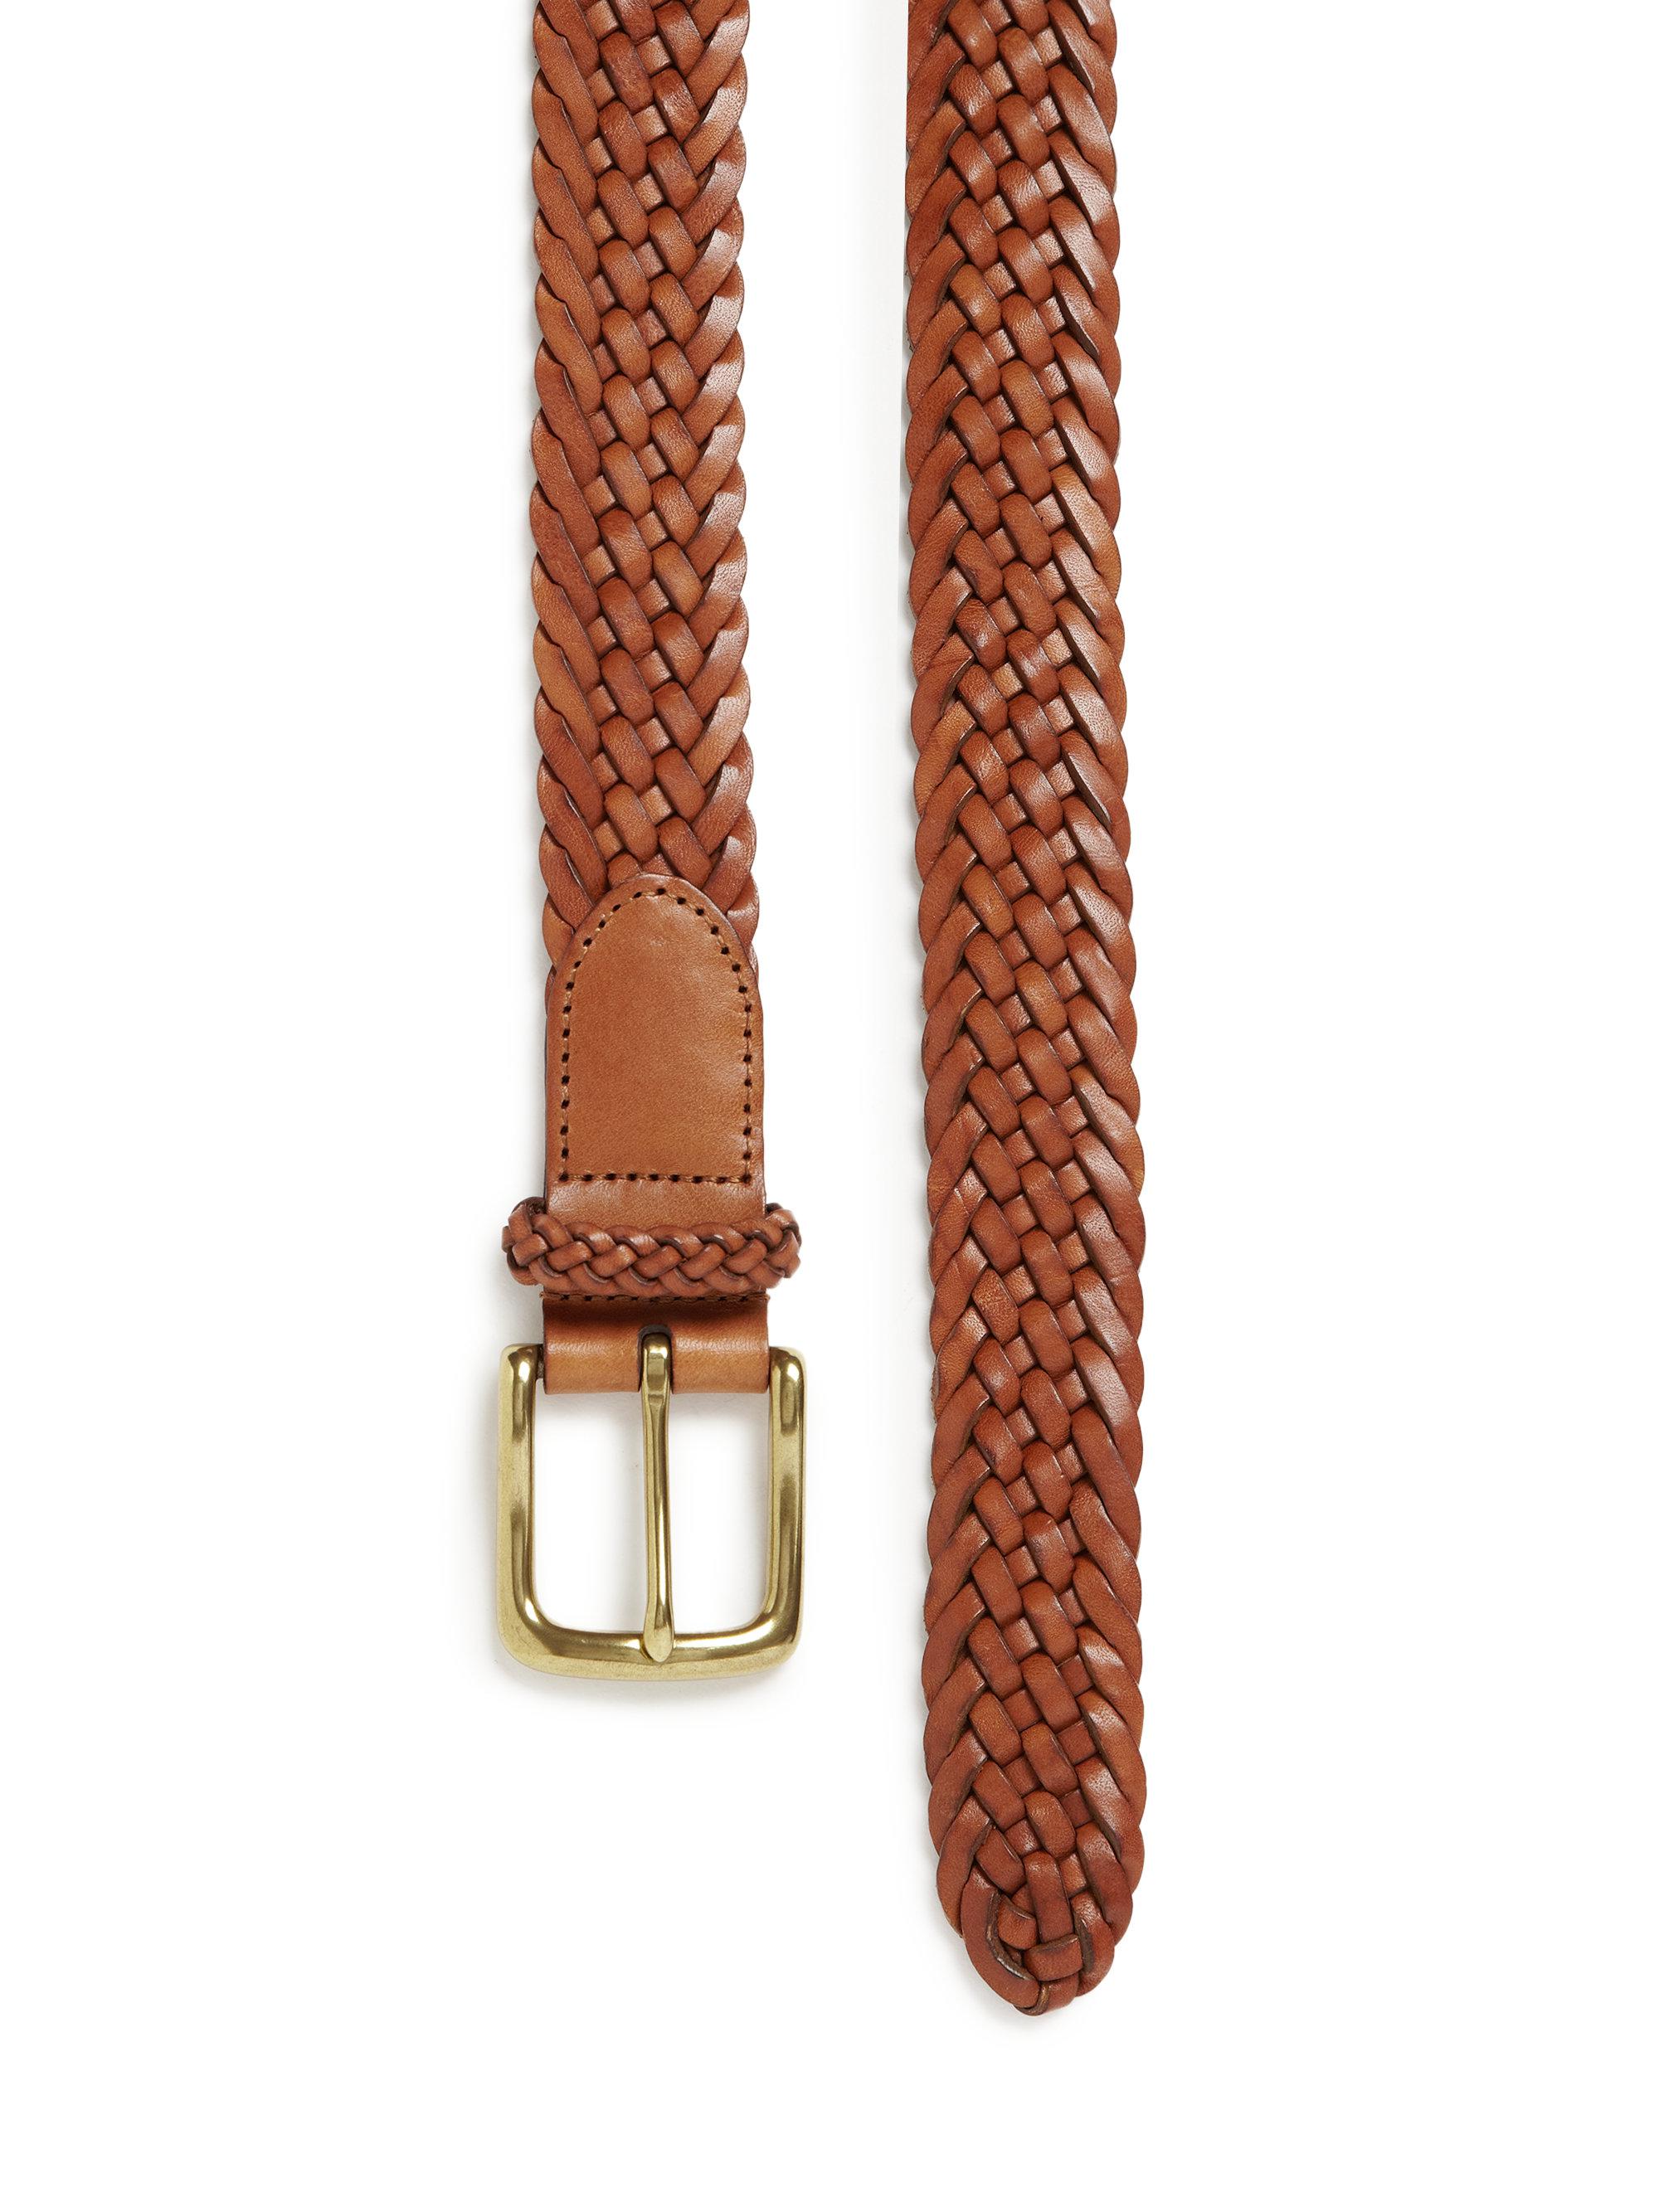 Polo Ralph Lauren Sportsman Braided Leather Belt in Brown for Men - Lyst